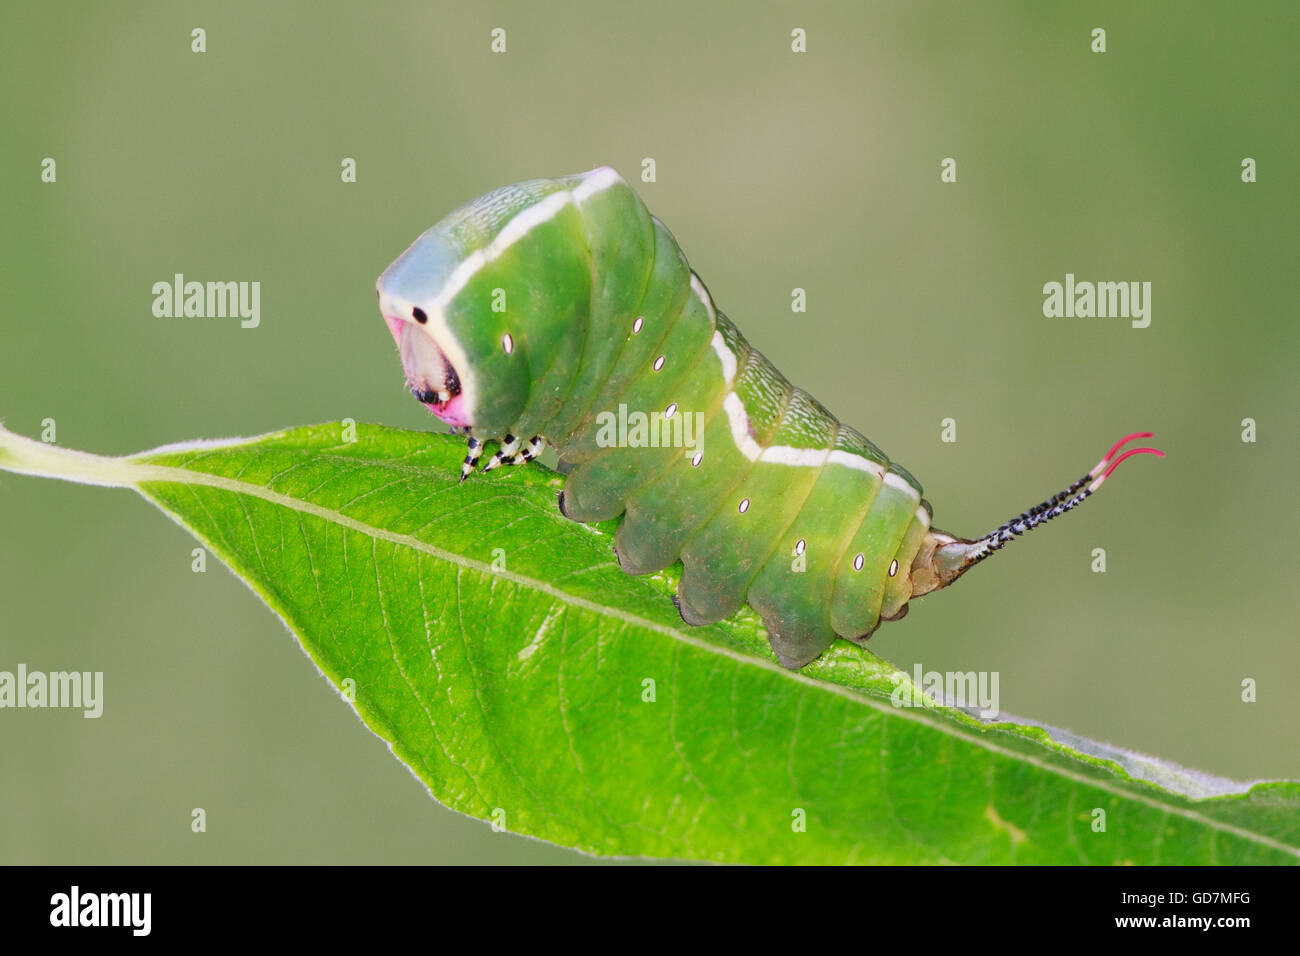 Caterpillar antennae hi-res stock photography and images - Alamy